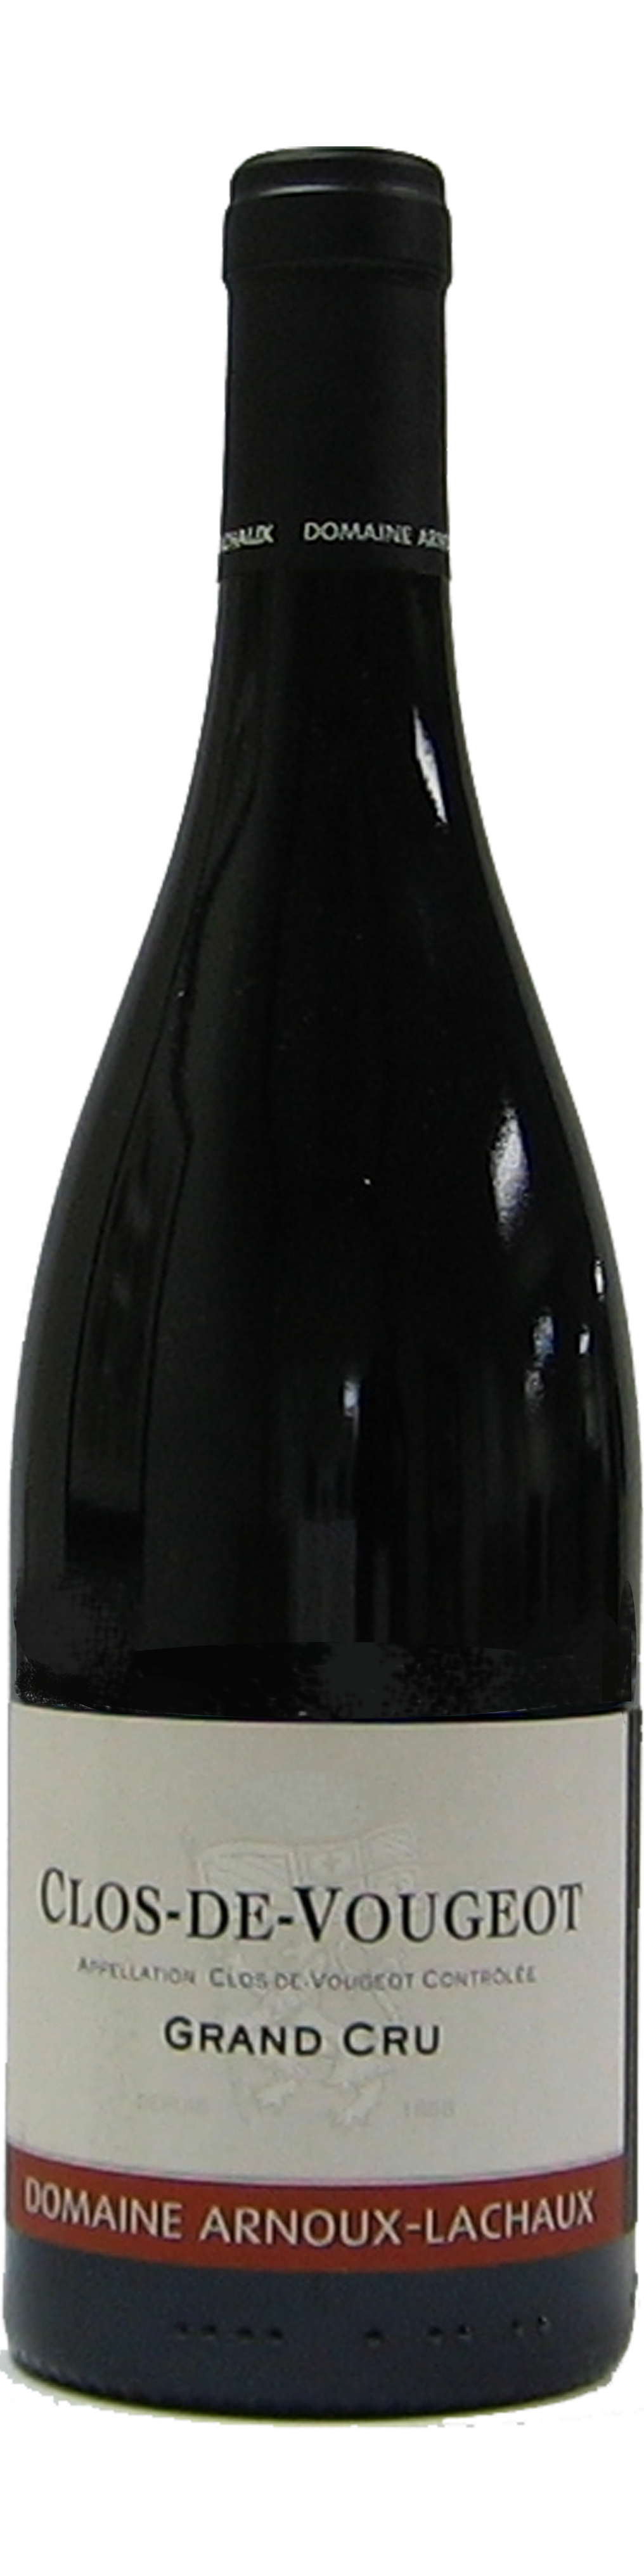 Bottle shot of 2007 Clos de Vougeot Grand Cru